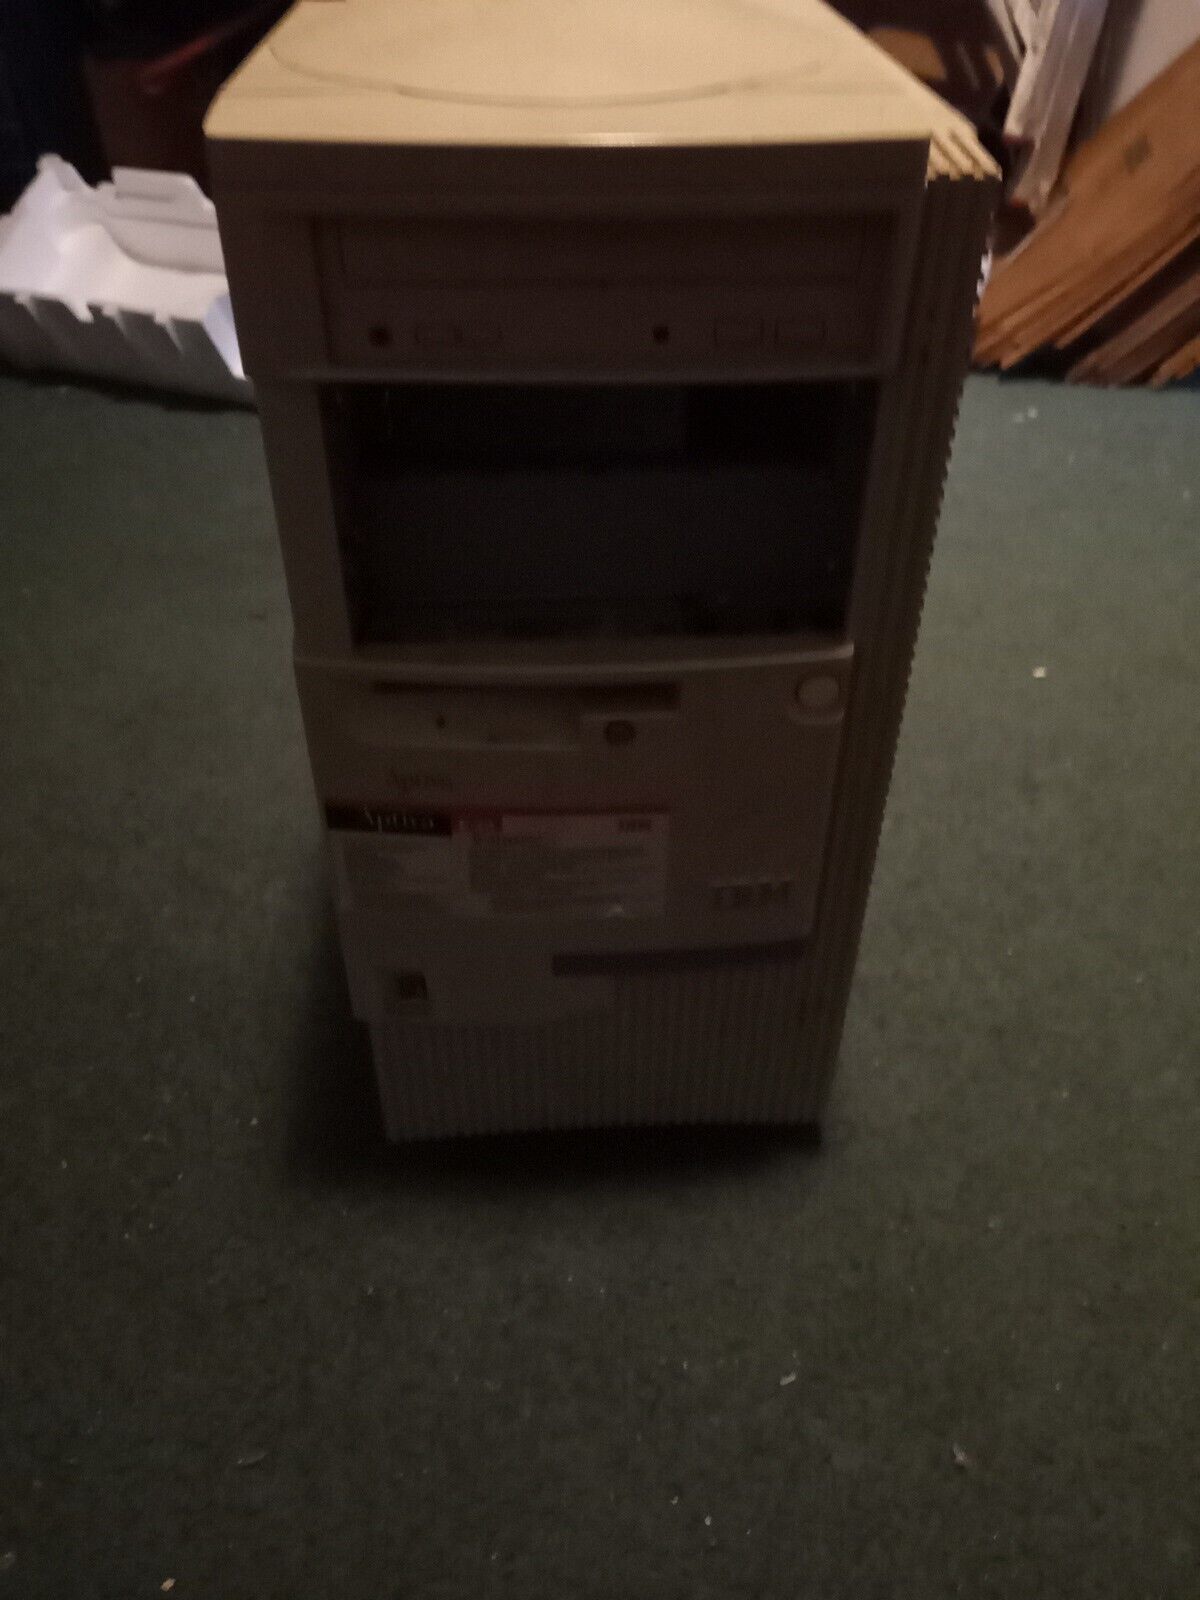 1998 Aptiva IBM Hard Drive Computer (For Working Parts)